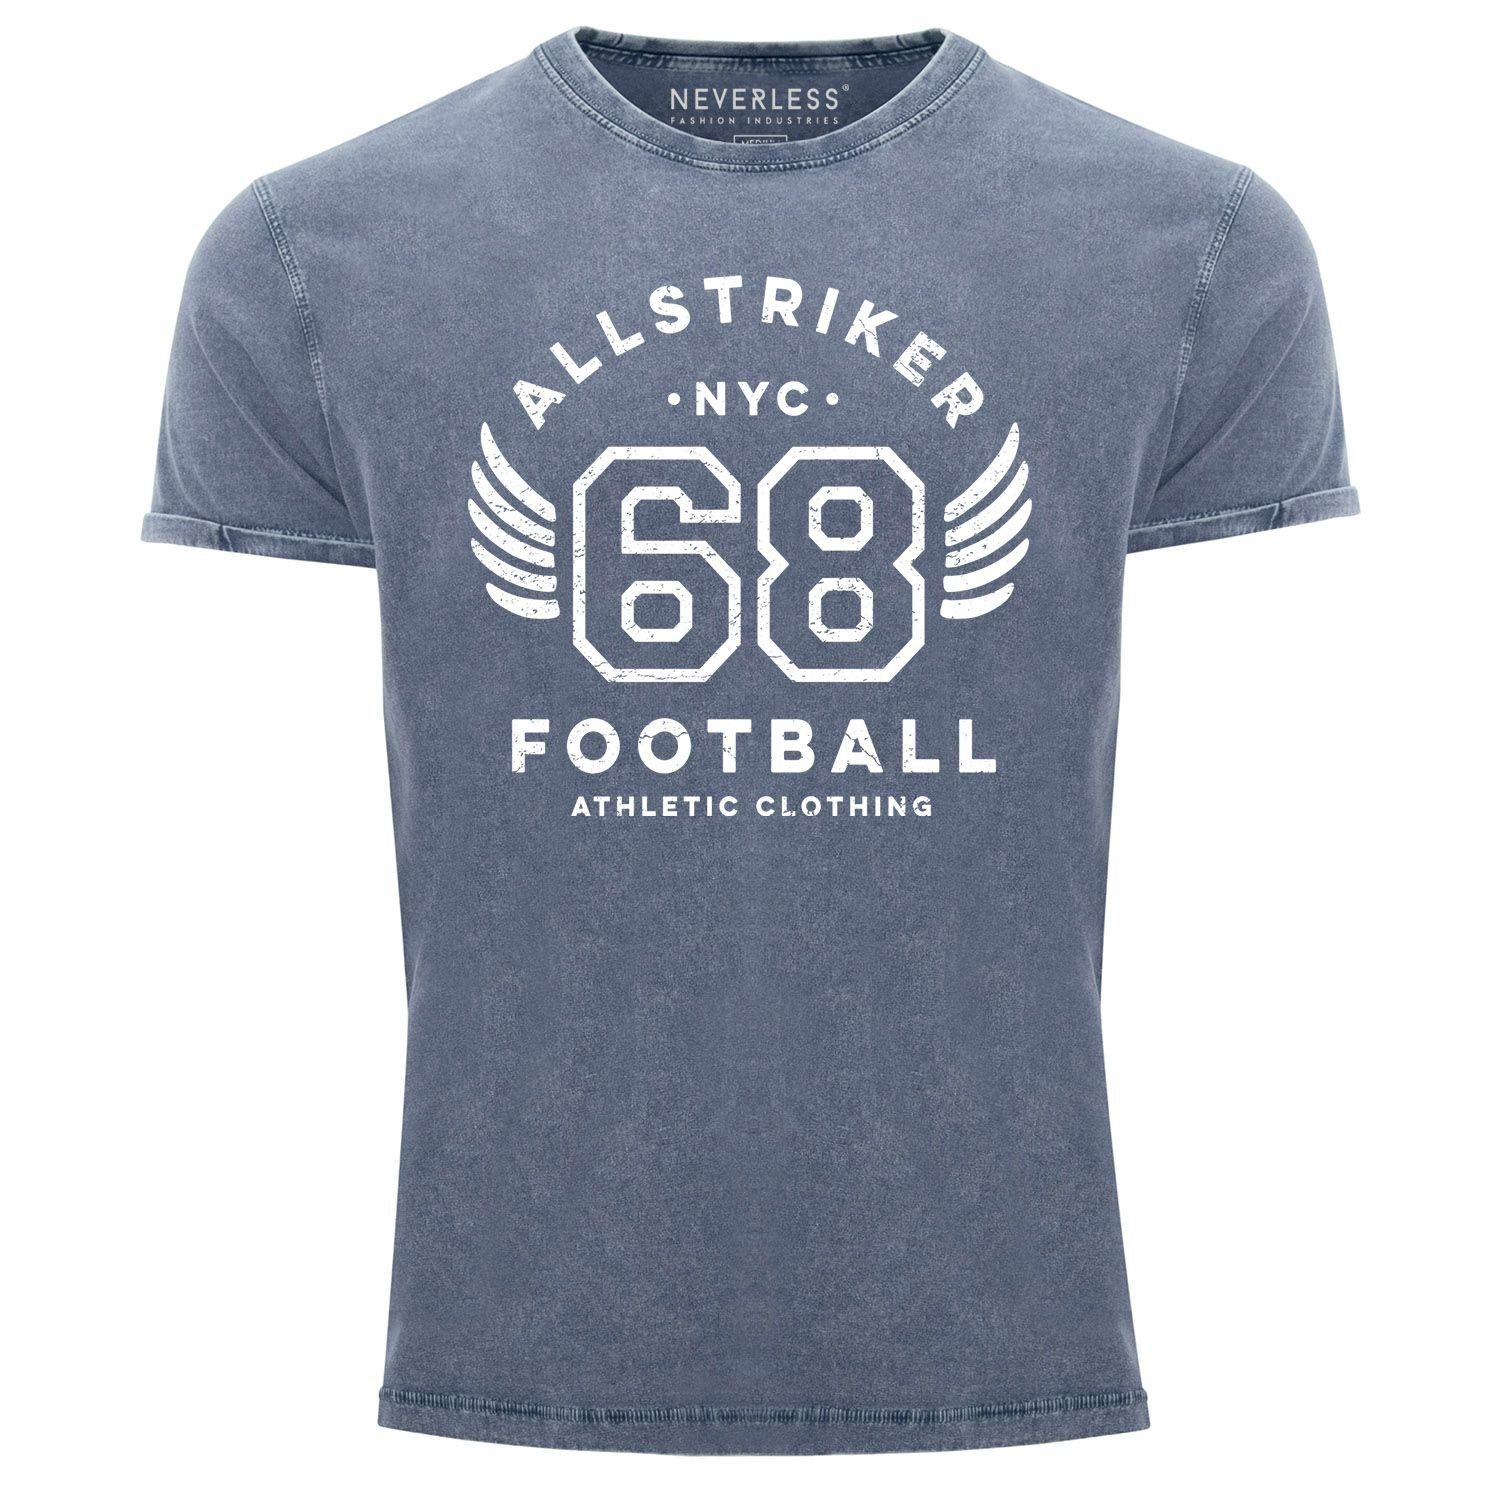 Football Used Neverless Shirt Print-Shirt Slim Printshirt Herren College mit Look Vintage Vintage blau Neverless® T-Shirt Athletic Clothing Print NYC 68 Fit